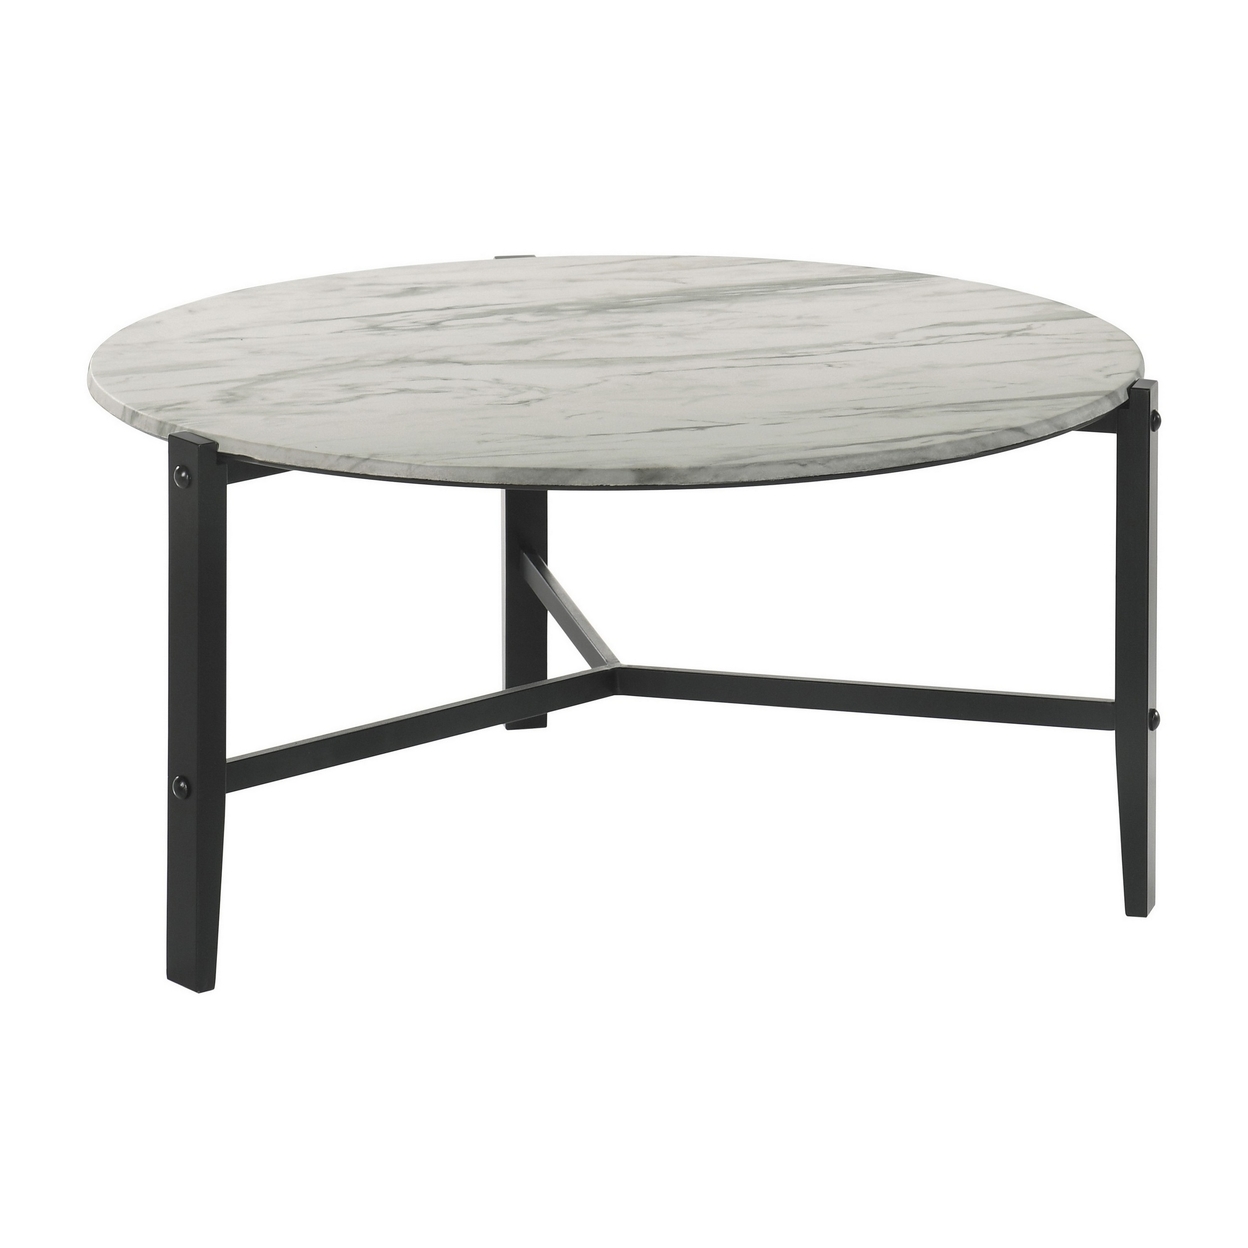 Zuko 36 Inch Round Coffee Table, White Faux Marble Design, Interlocked Legs- Saltoro Sherpi